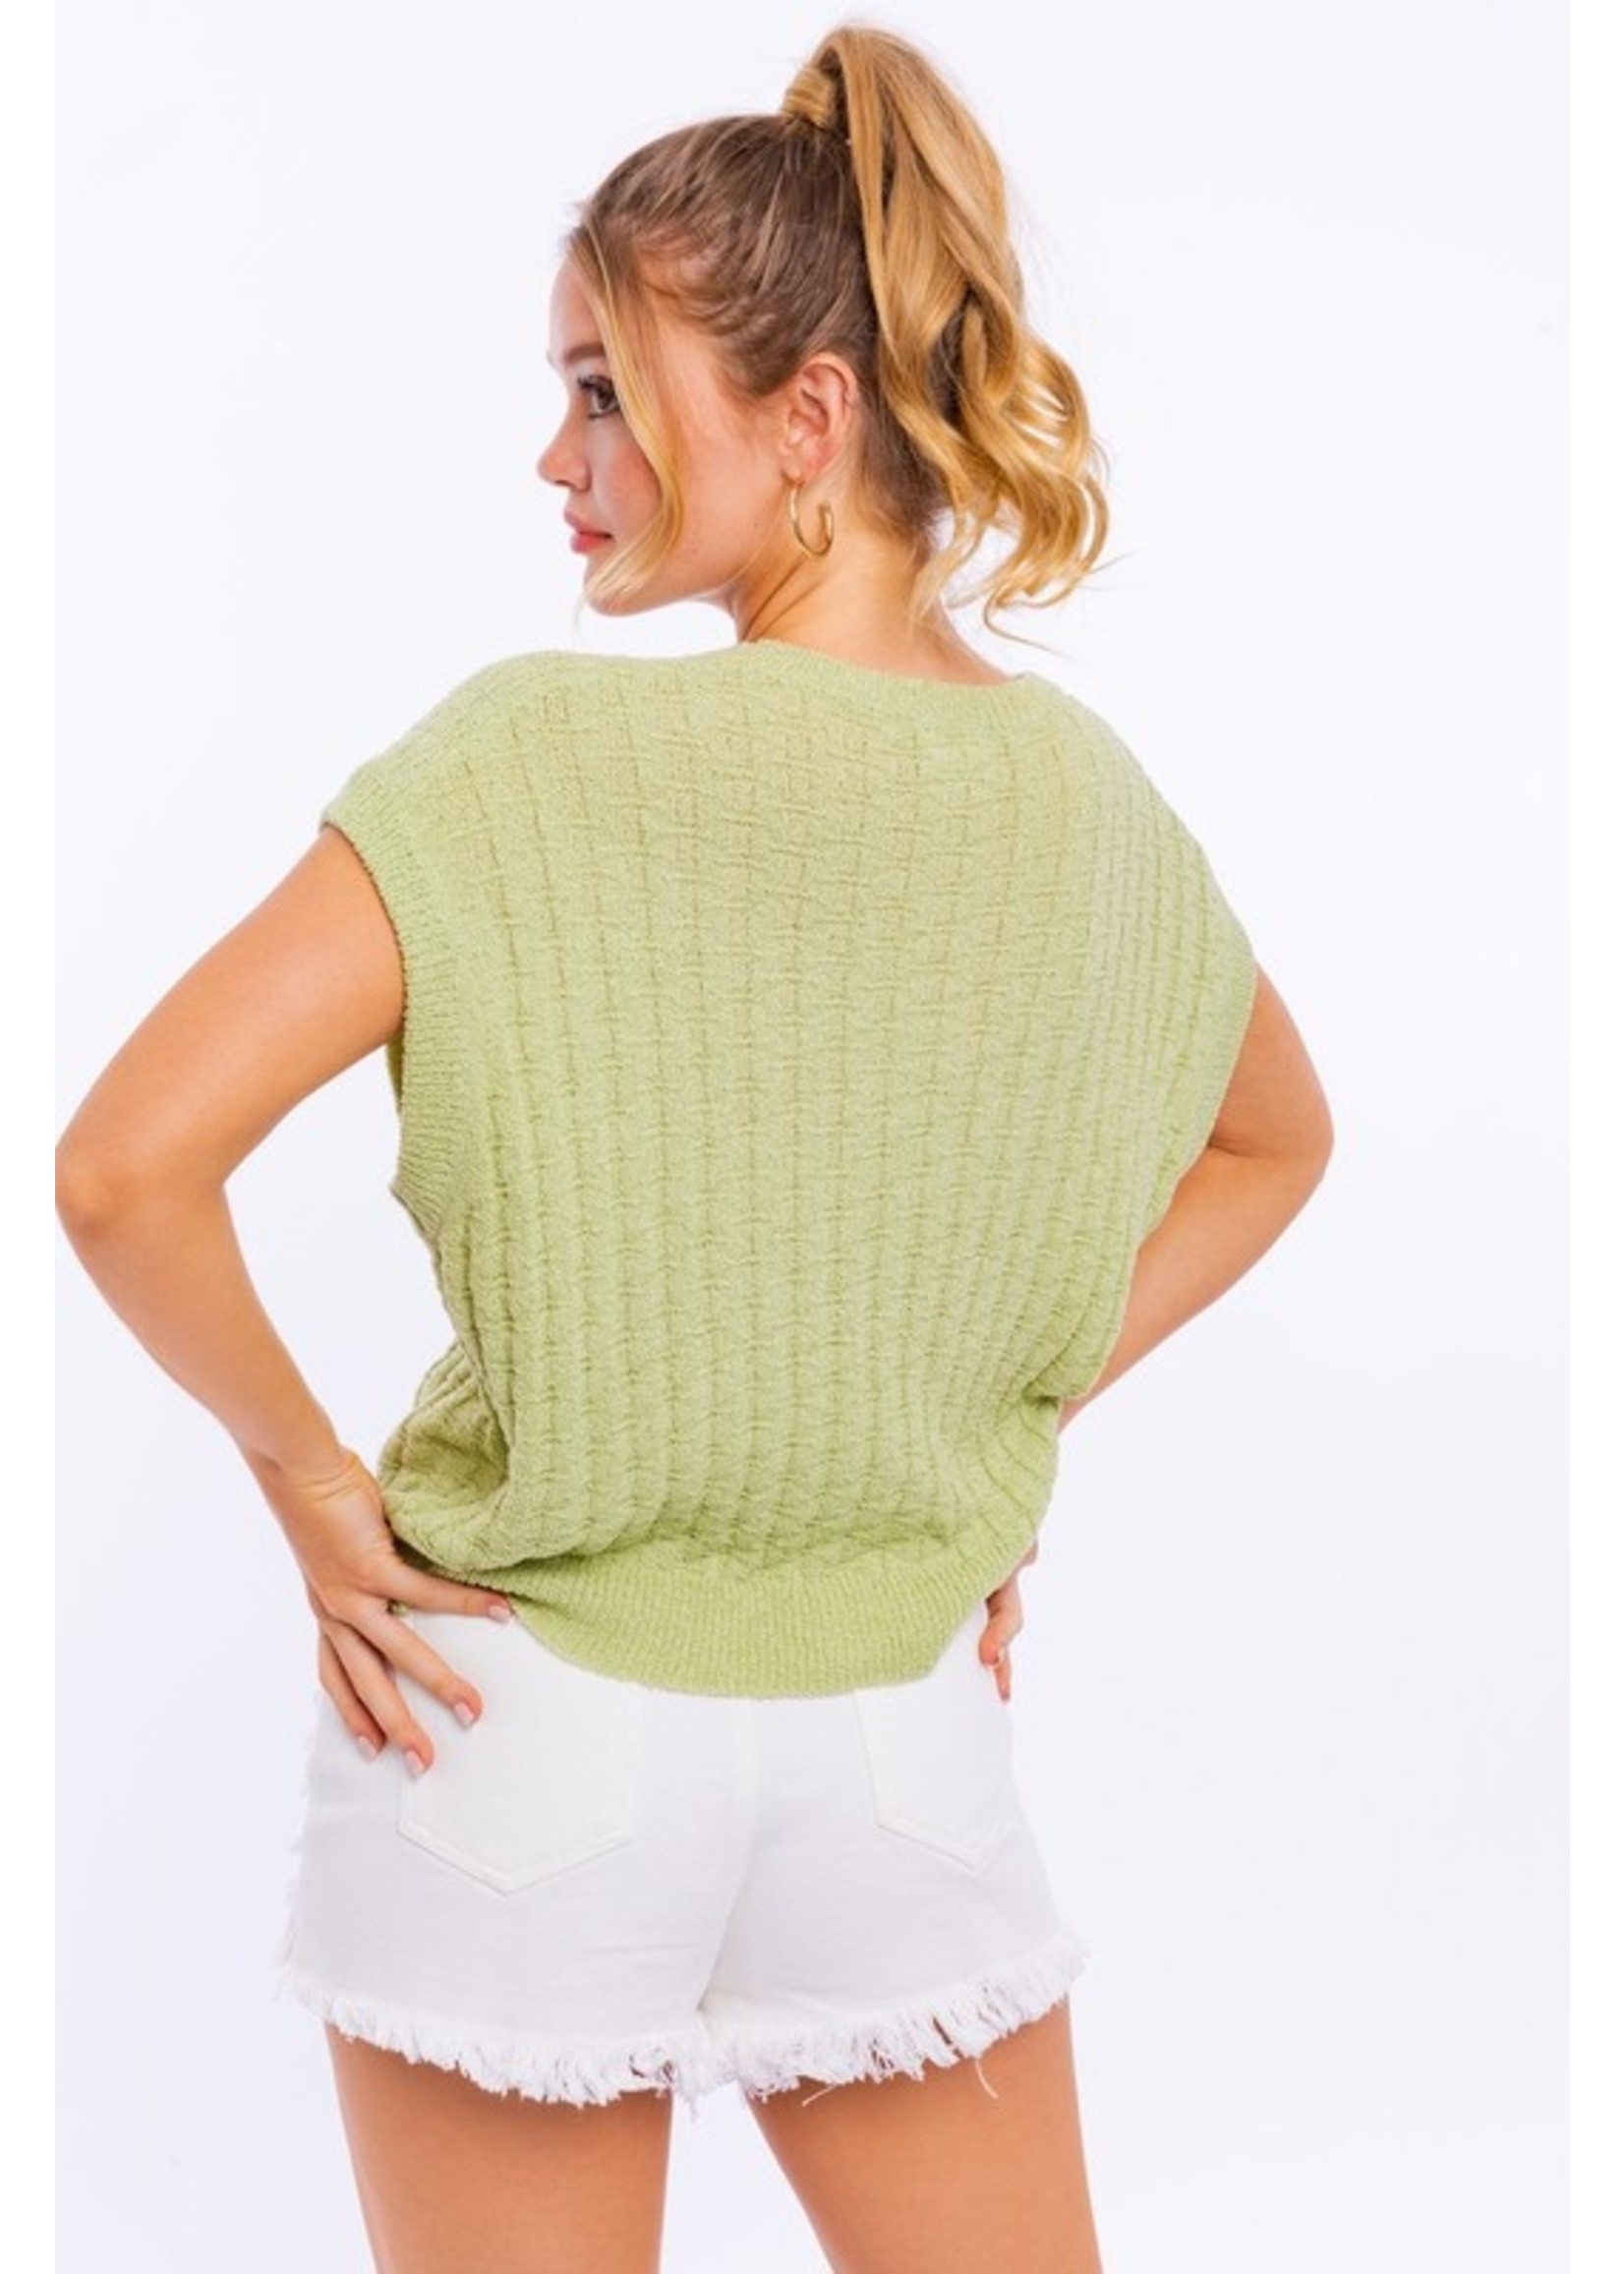 Le Lis Round Neck Boxy Sleeveless Sweater Top - SWT7518